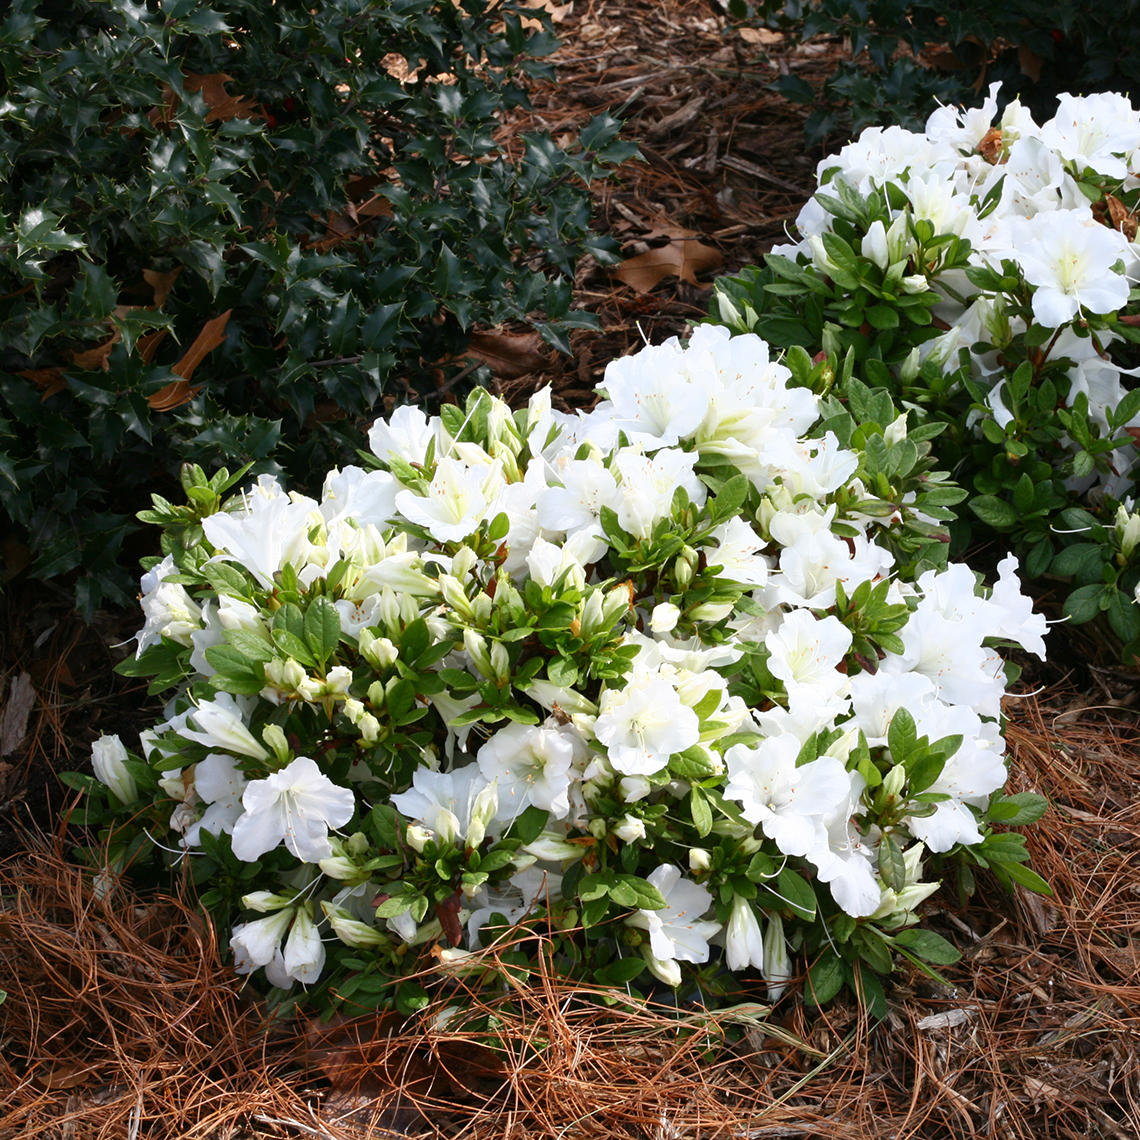 Bloom-A-Thon White reblooming azalea in garden with mulch